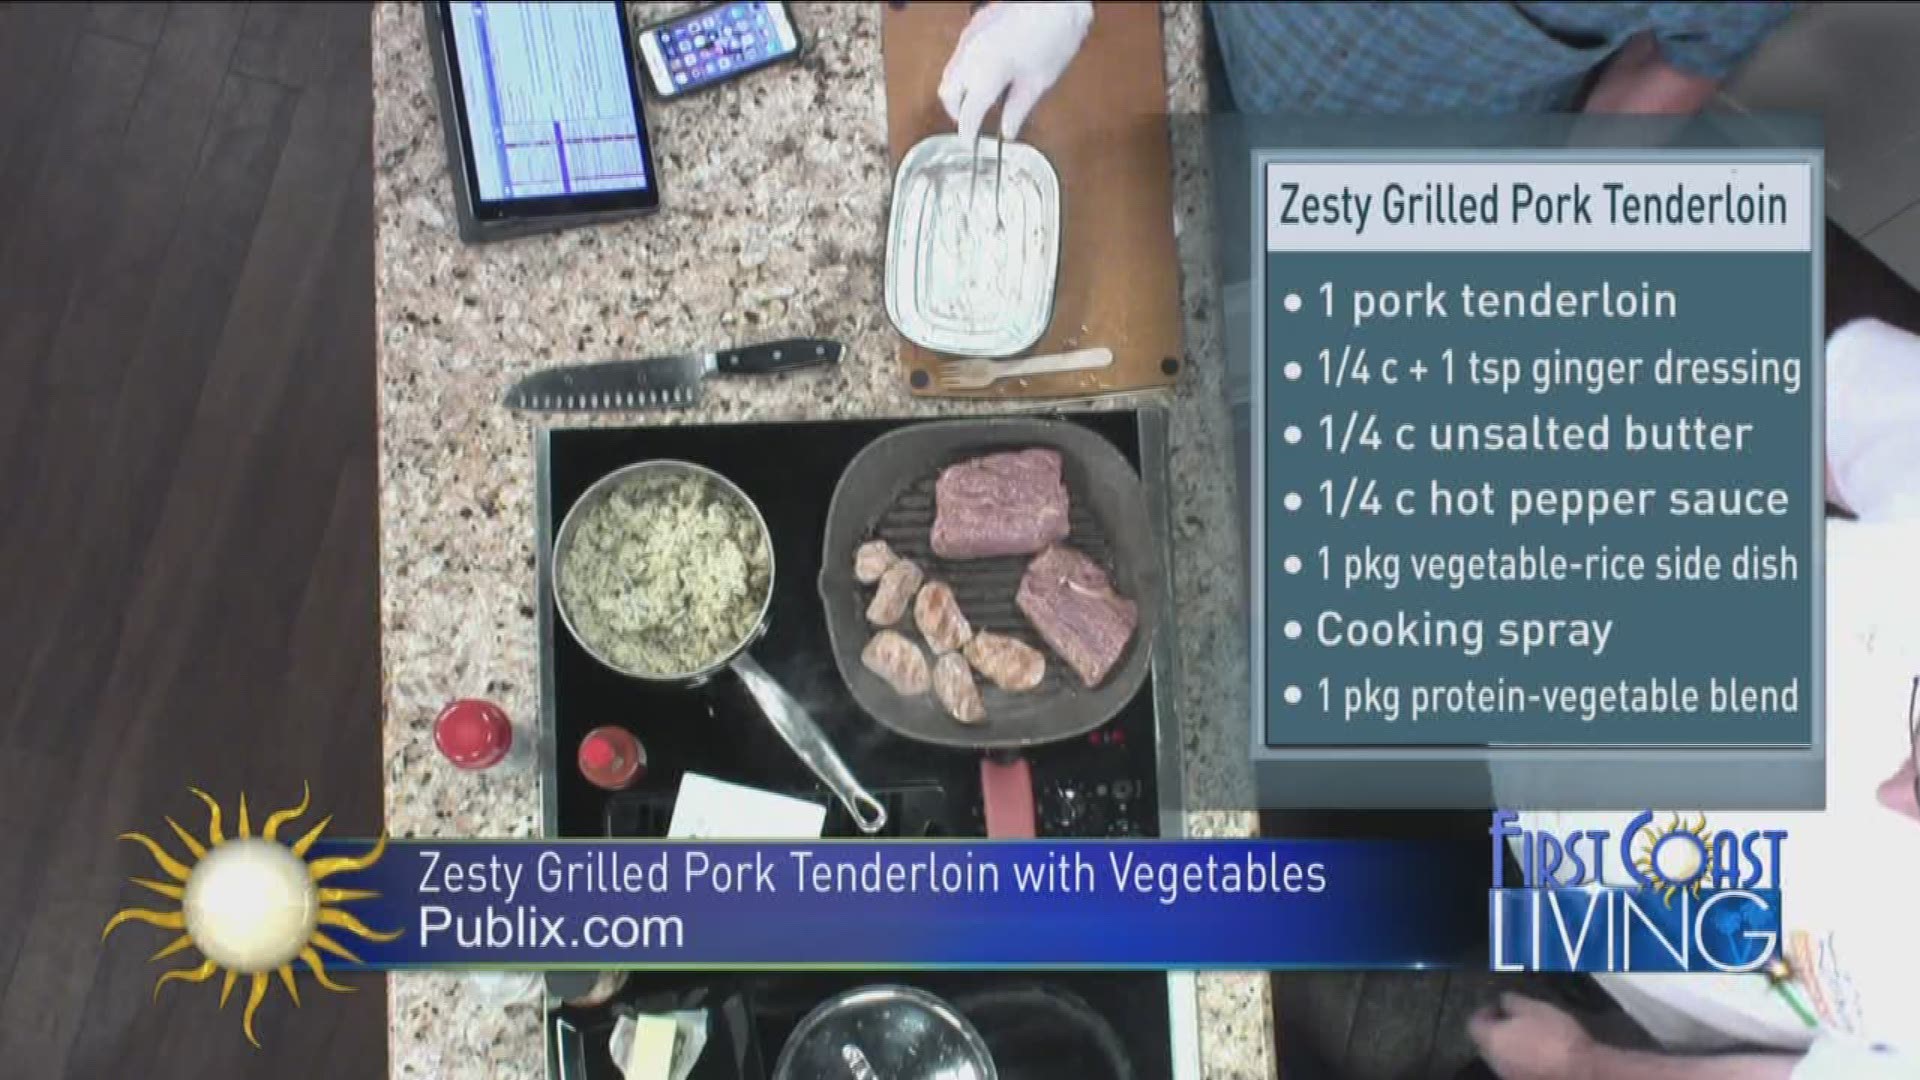 What's Cookin with Publix, Zesty Grilled Pork Tenderloin